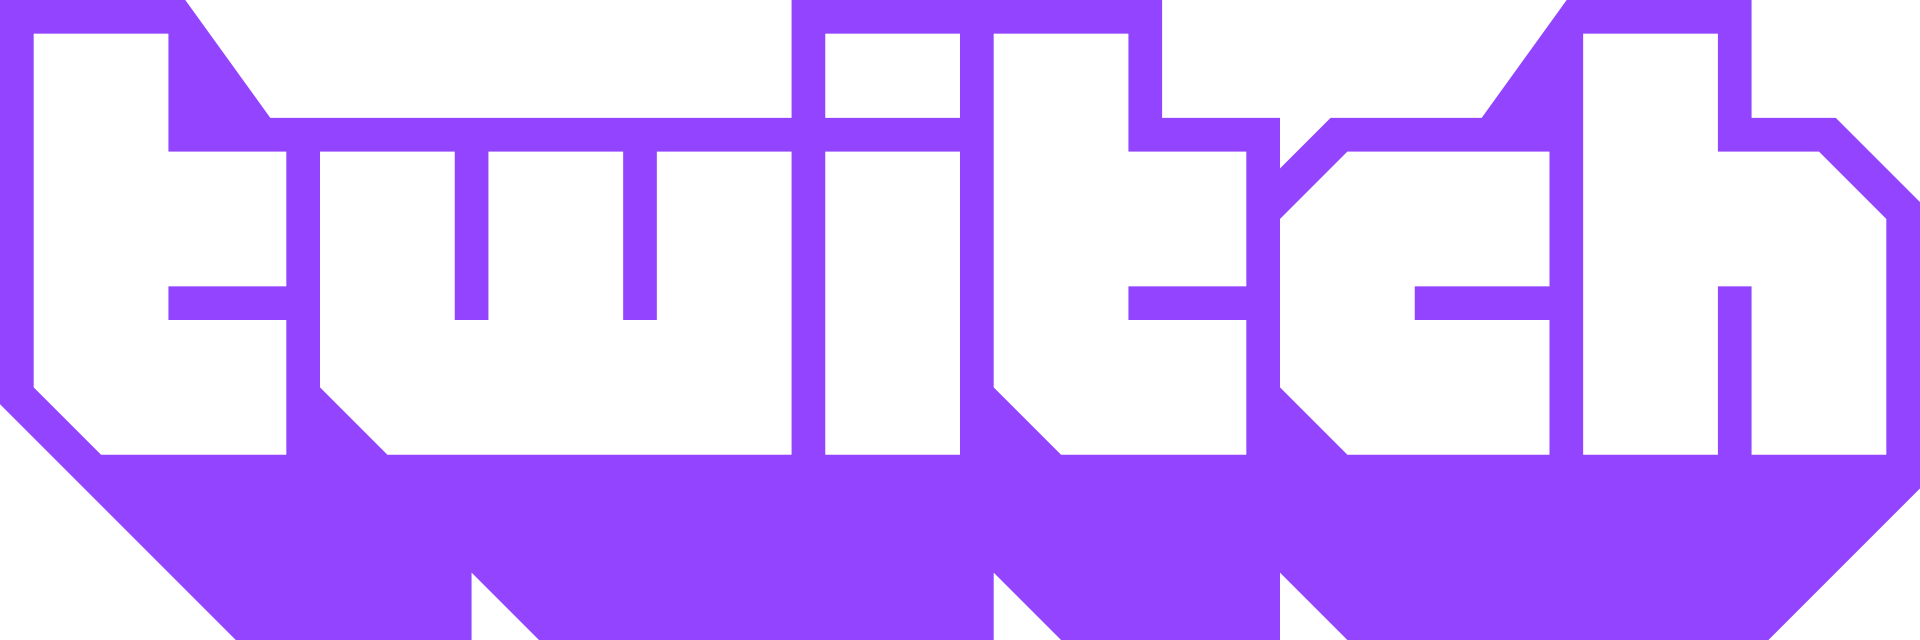 Twitch Logo (2019-present) Blank Meme Template